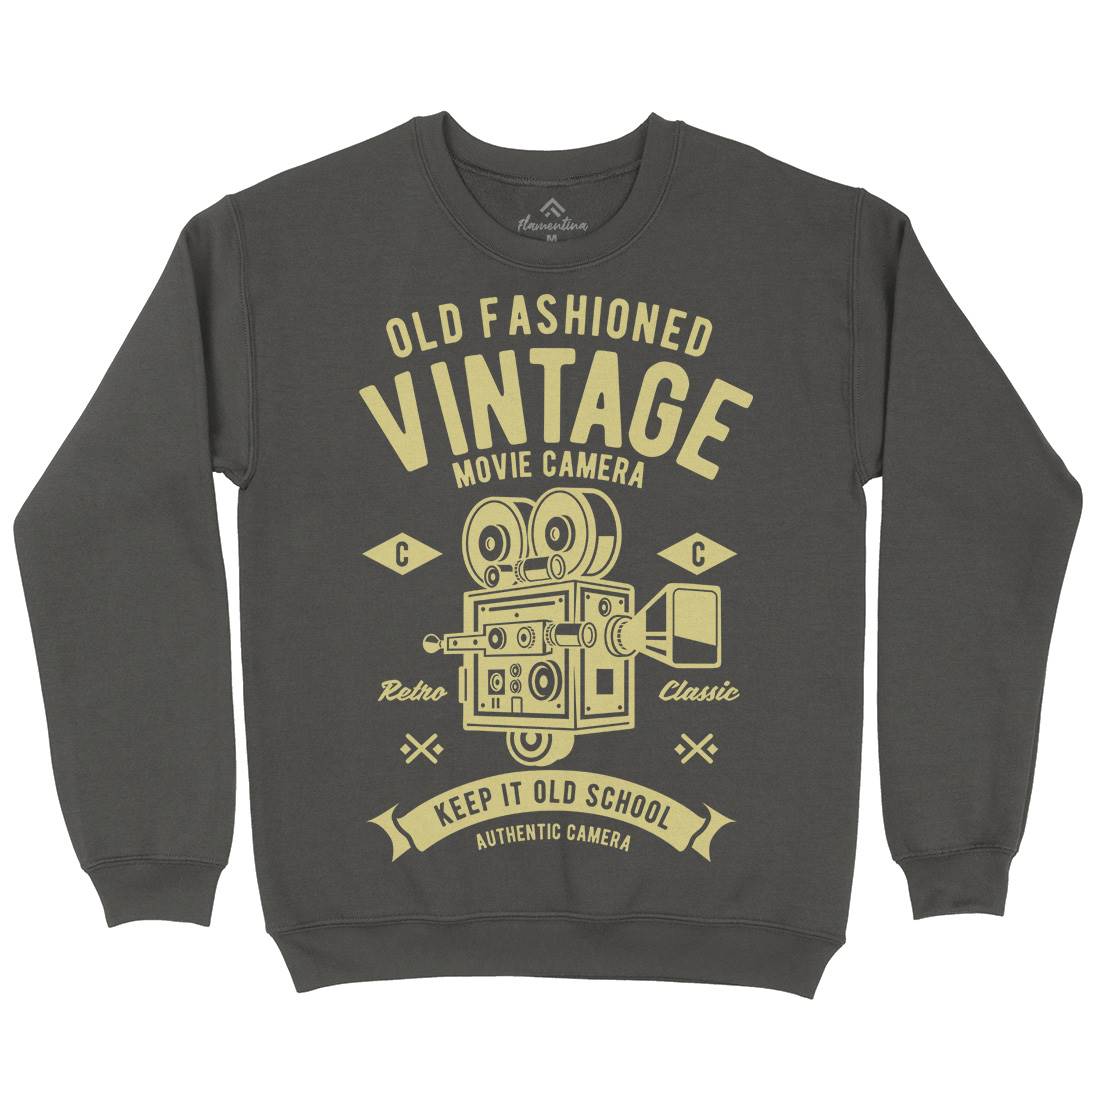 Vintage Movie Camera Kids Crew Neck Sweatshirt Media A299